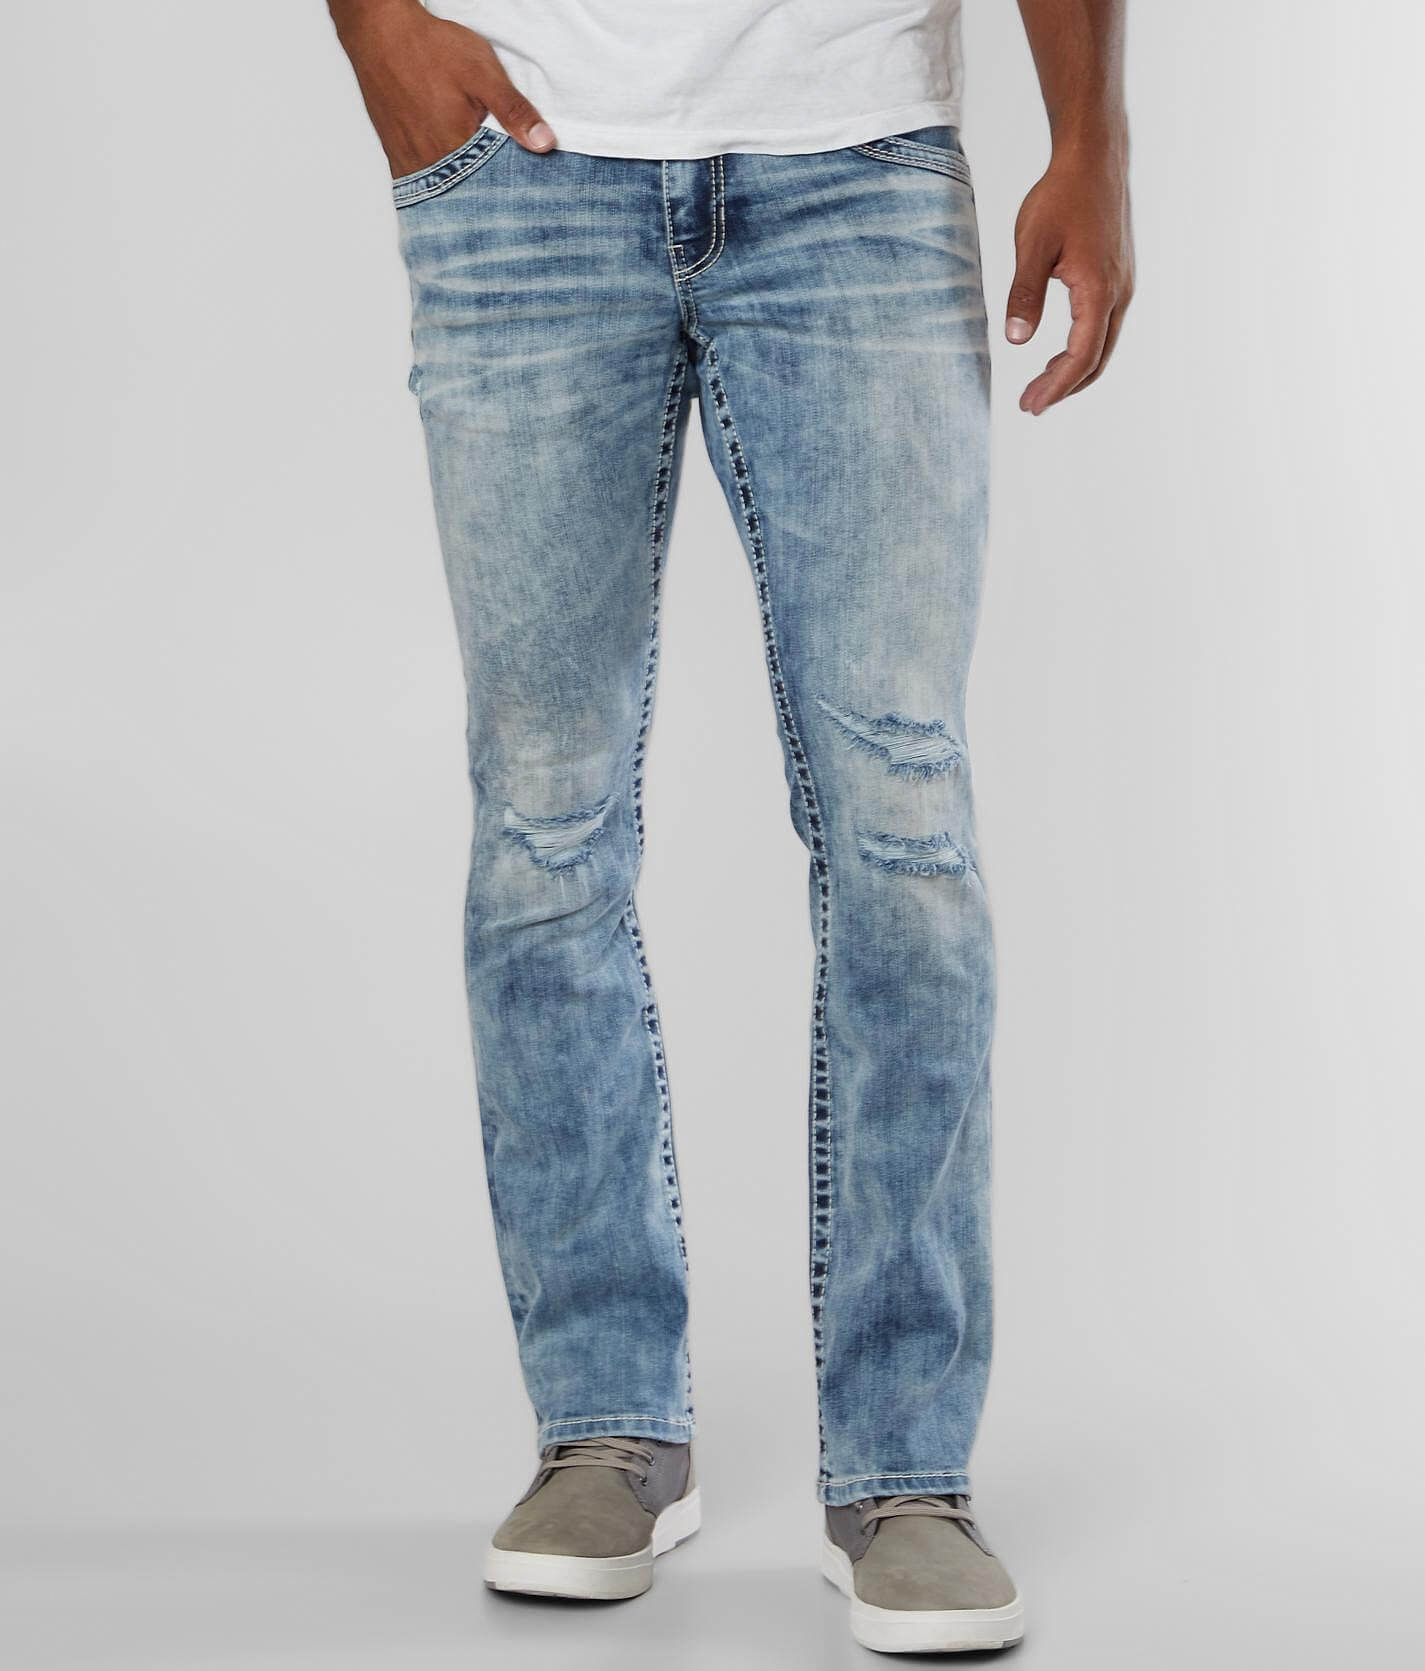 mens bke jeans cheap